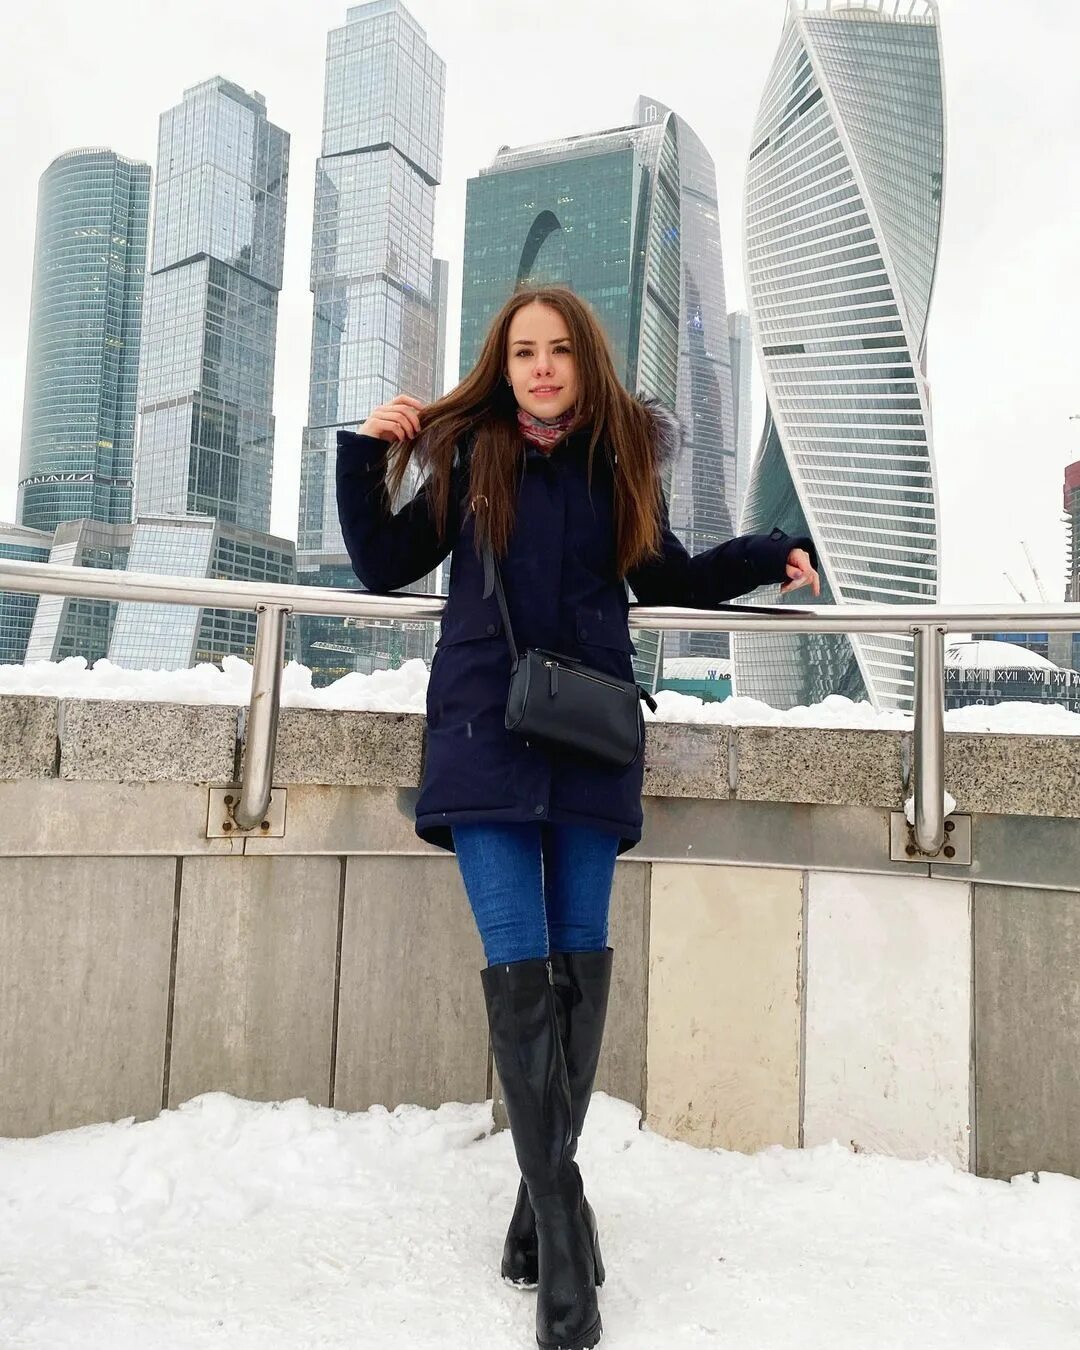 FOX сделал(-а) публикацию в Instagram: “Moscow city 🏙” • Посмотрите все фо...